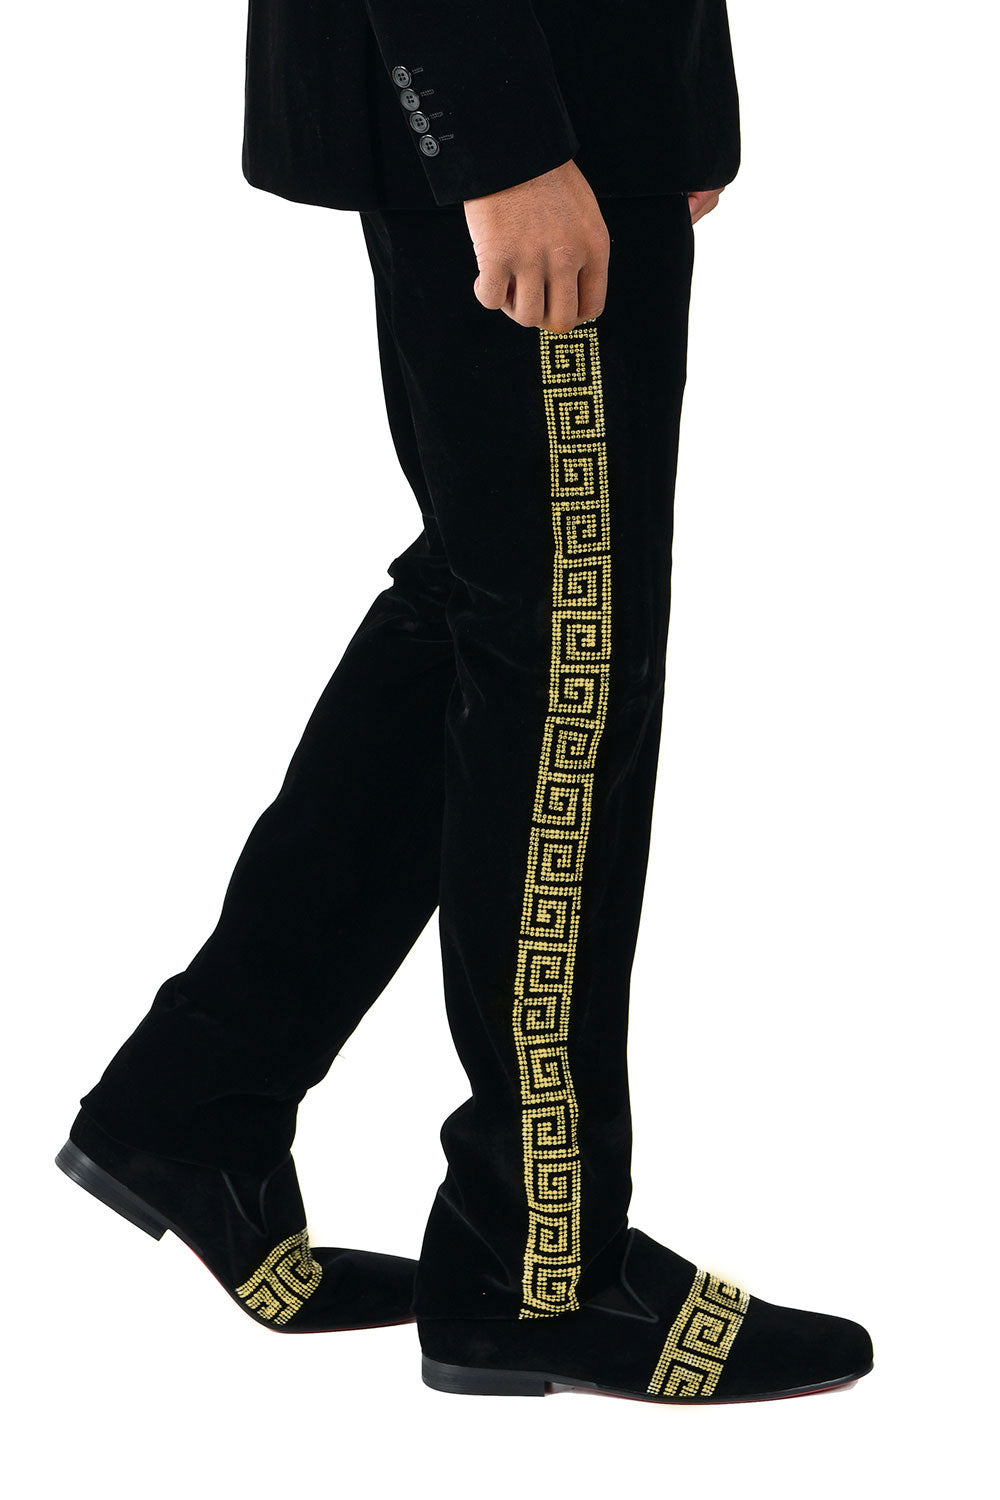 Barabas Men's Velvet Rhinestone Greek Pattern Chino Dress Pants CP3067 Black Gold